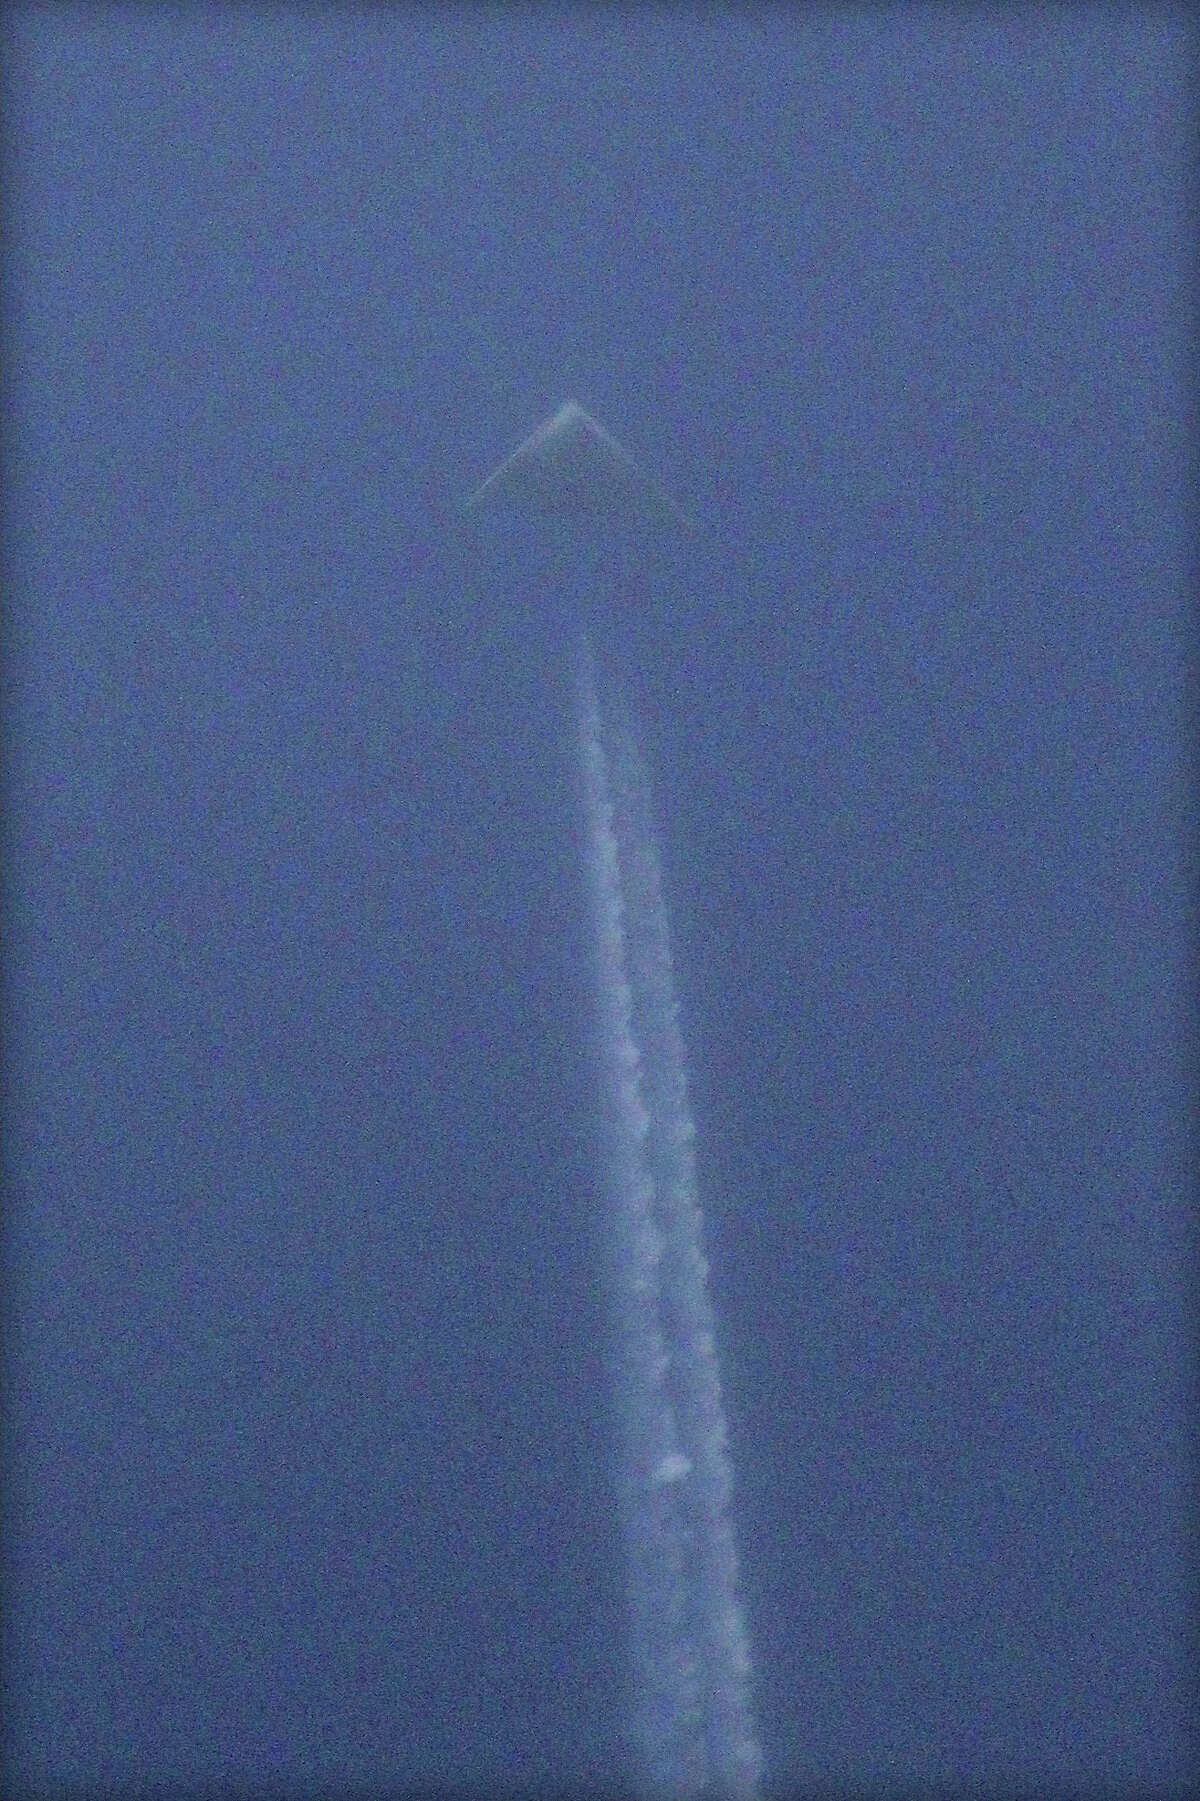 Mystery aircraft spotted over Kansas. (Jeff Templin photo)